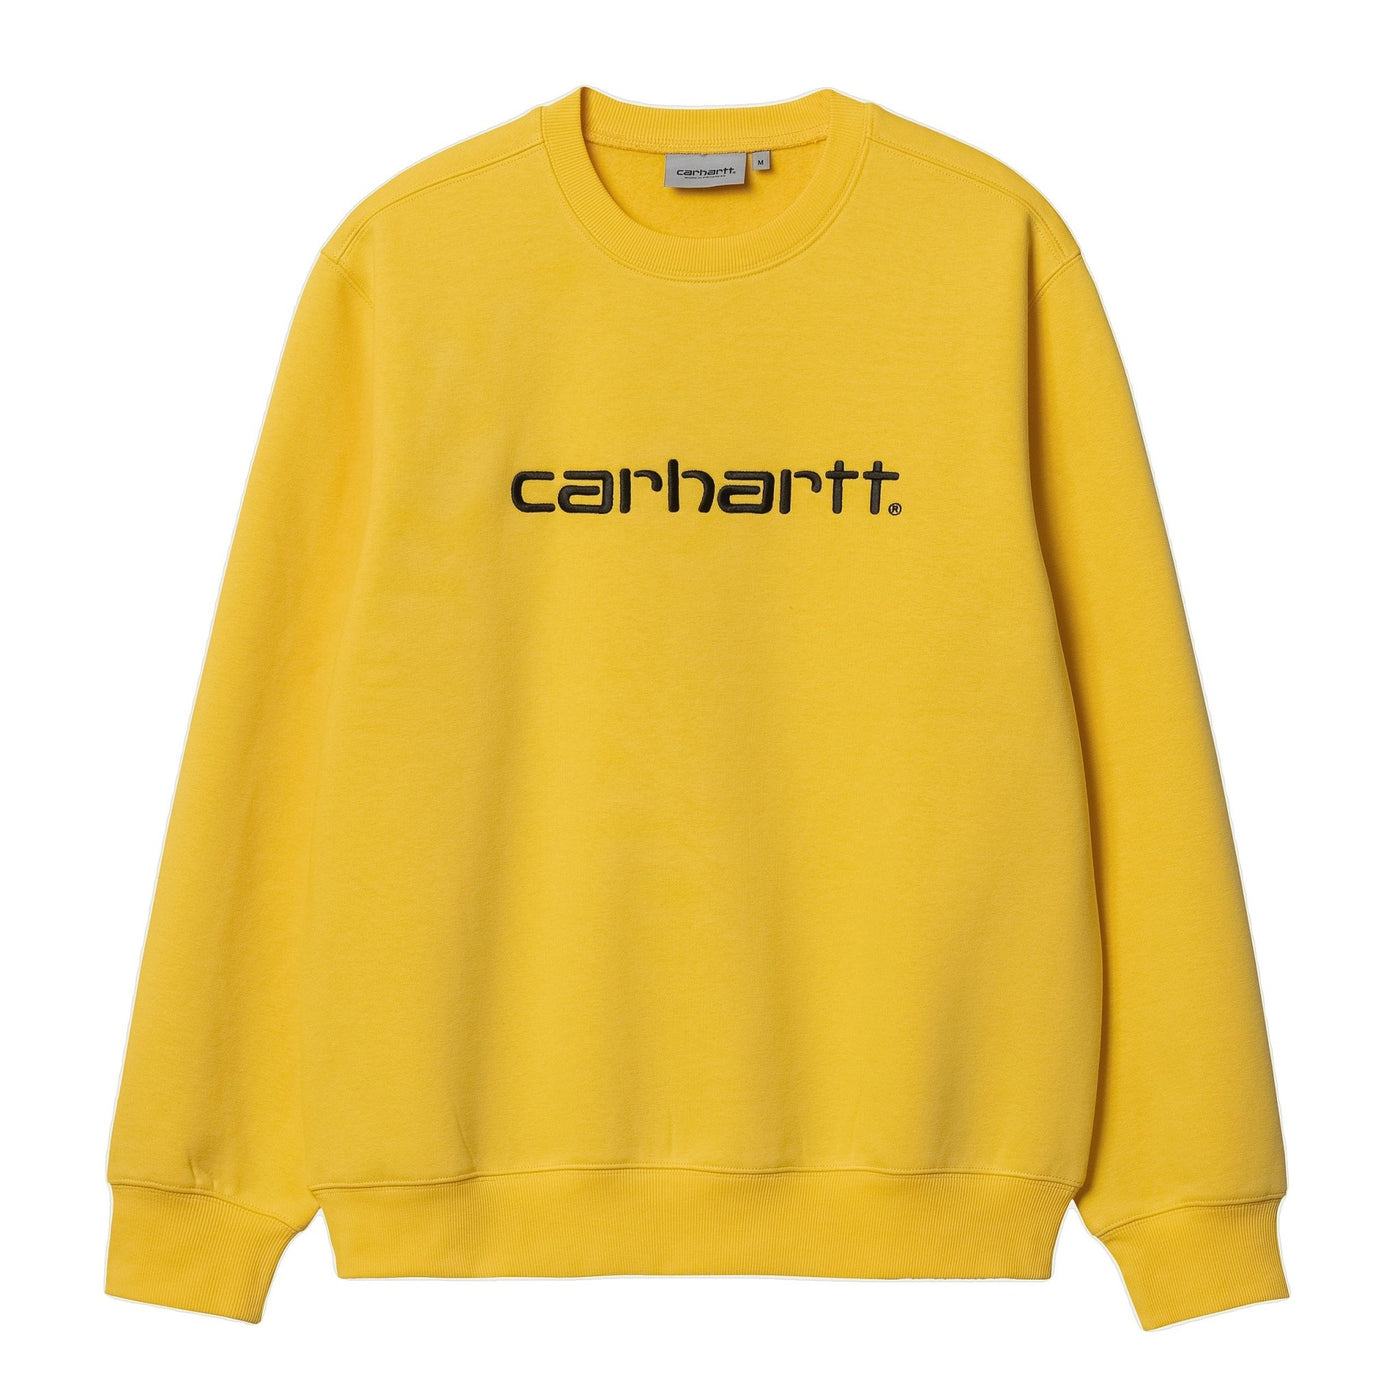 Carhartt WIP - Sweatshirt -Buttercup Black - Lothaire